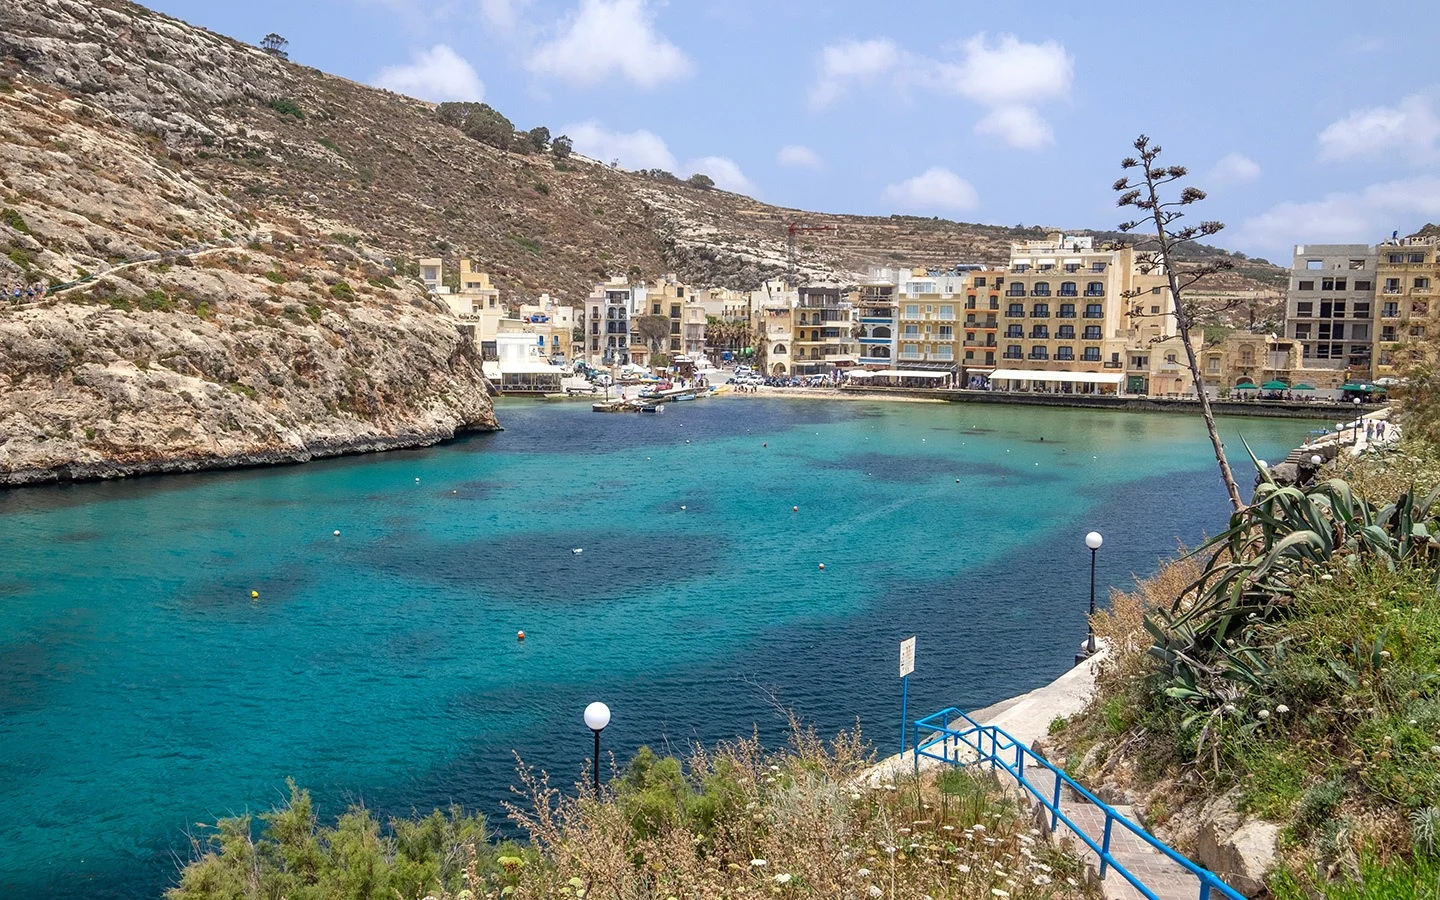 The blue waters of Xlendi Bay in Gozo, Malta